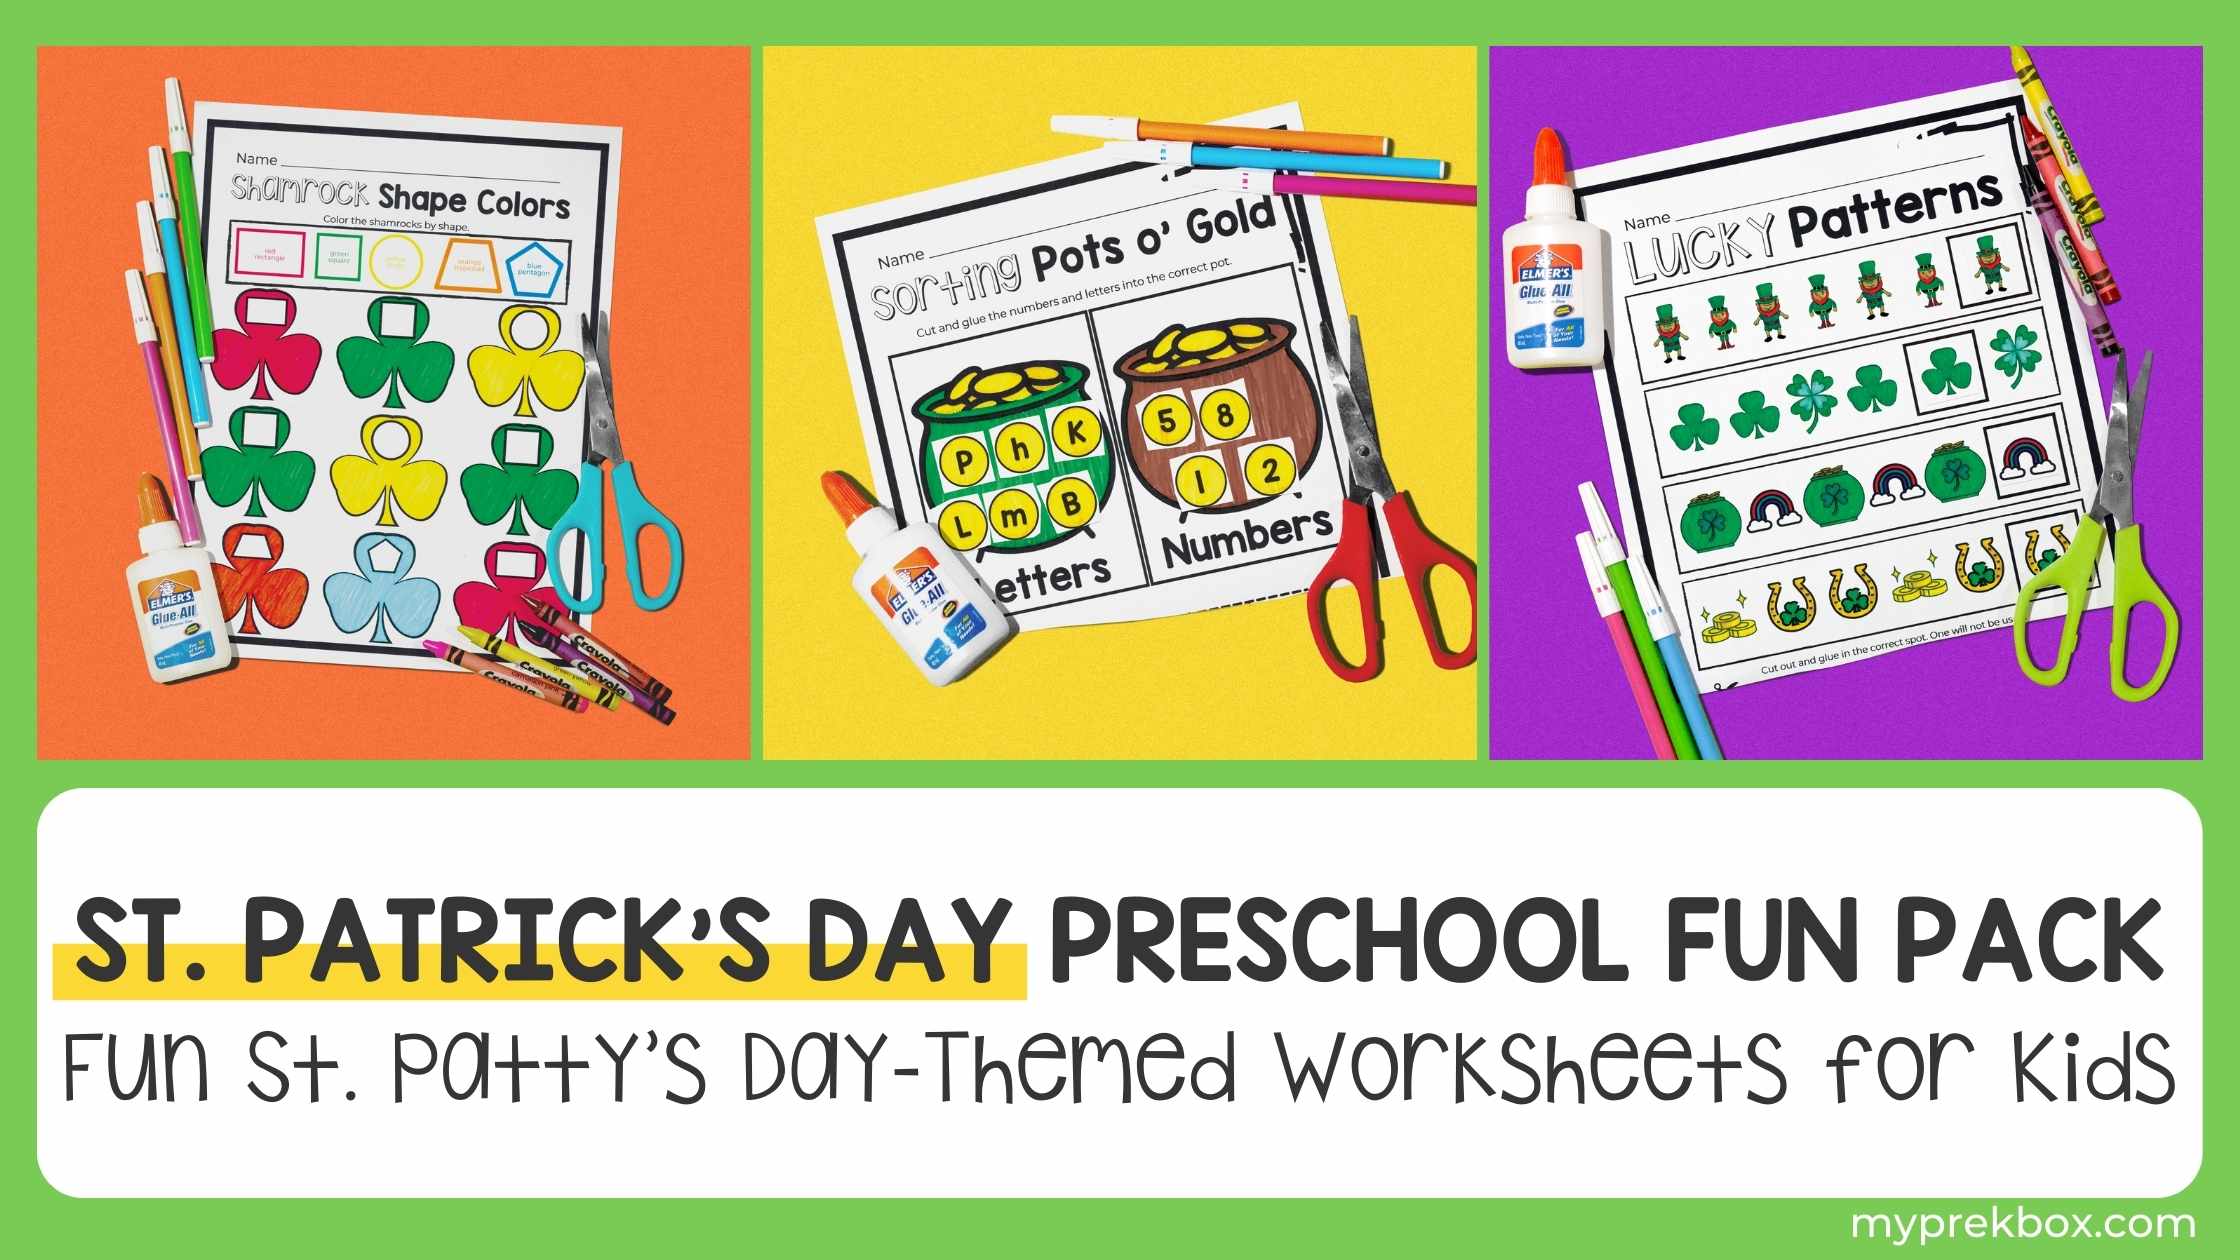 Fun St. Patrick's Day Preschool Worksheets